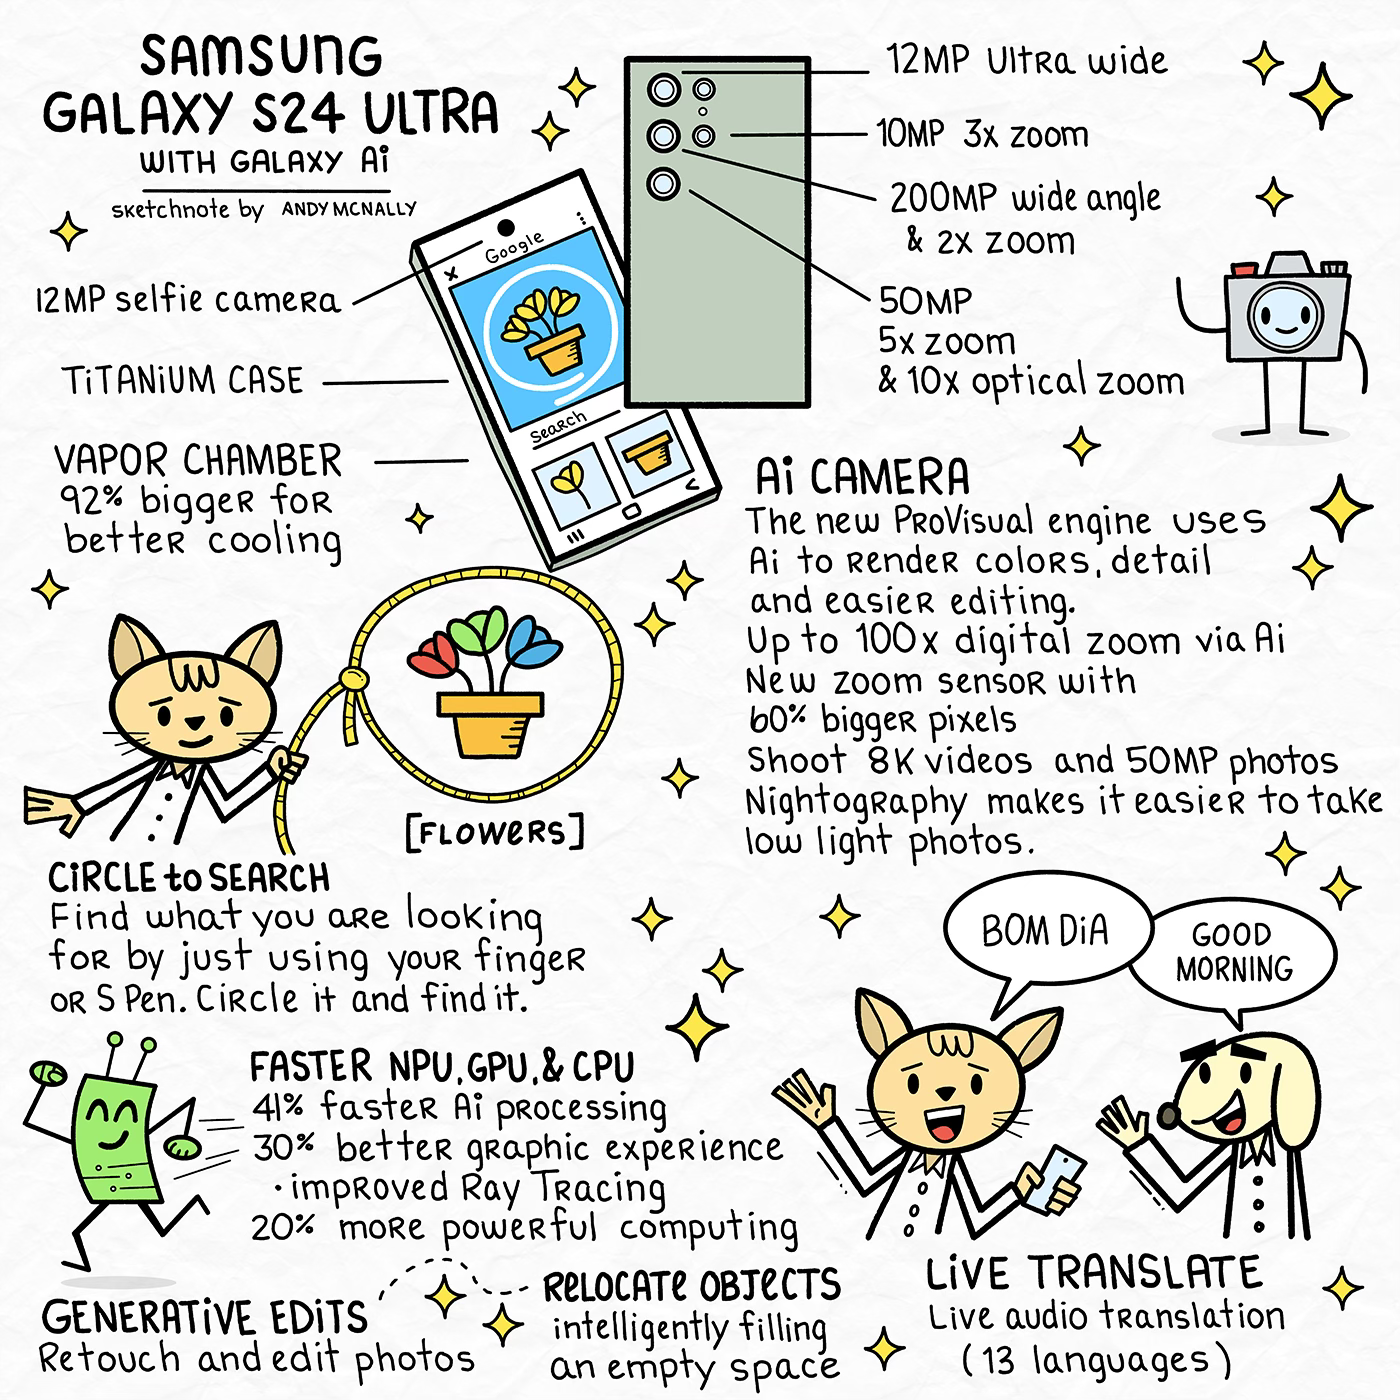 sketchnote of the Samsung Galaxy S24 Ultra